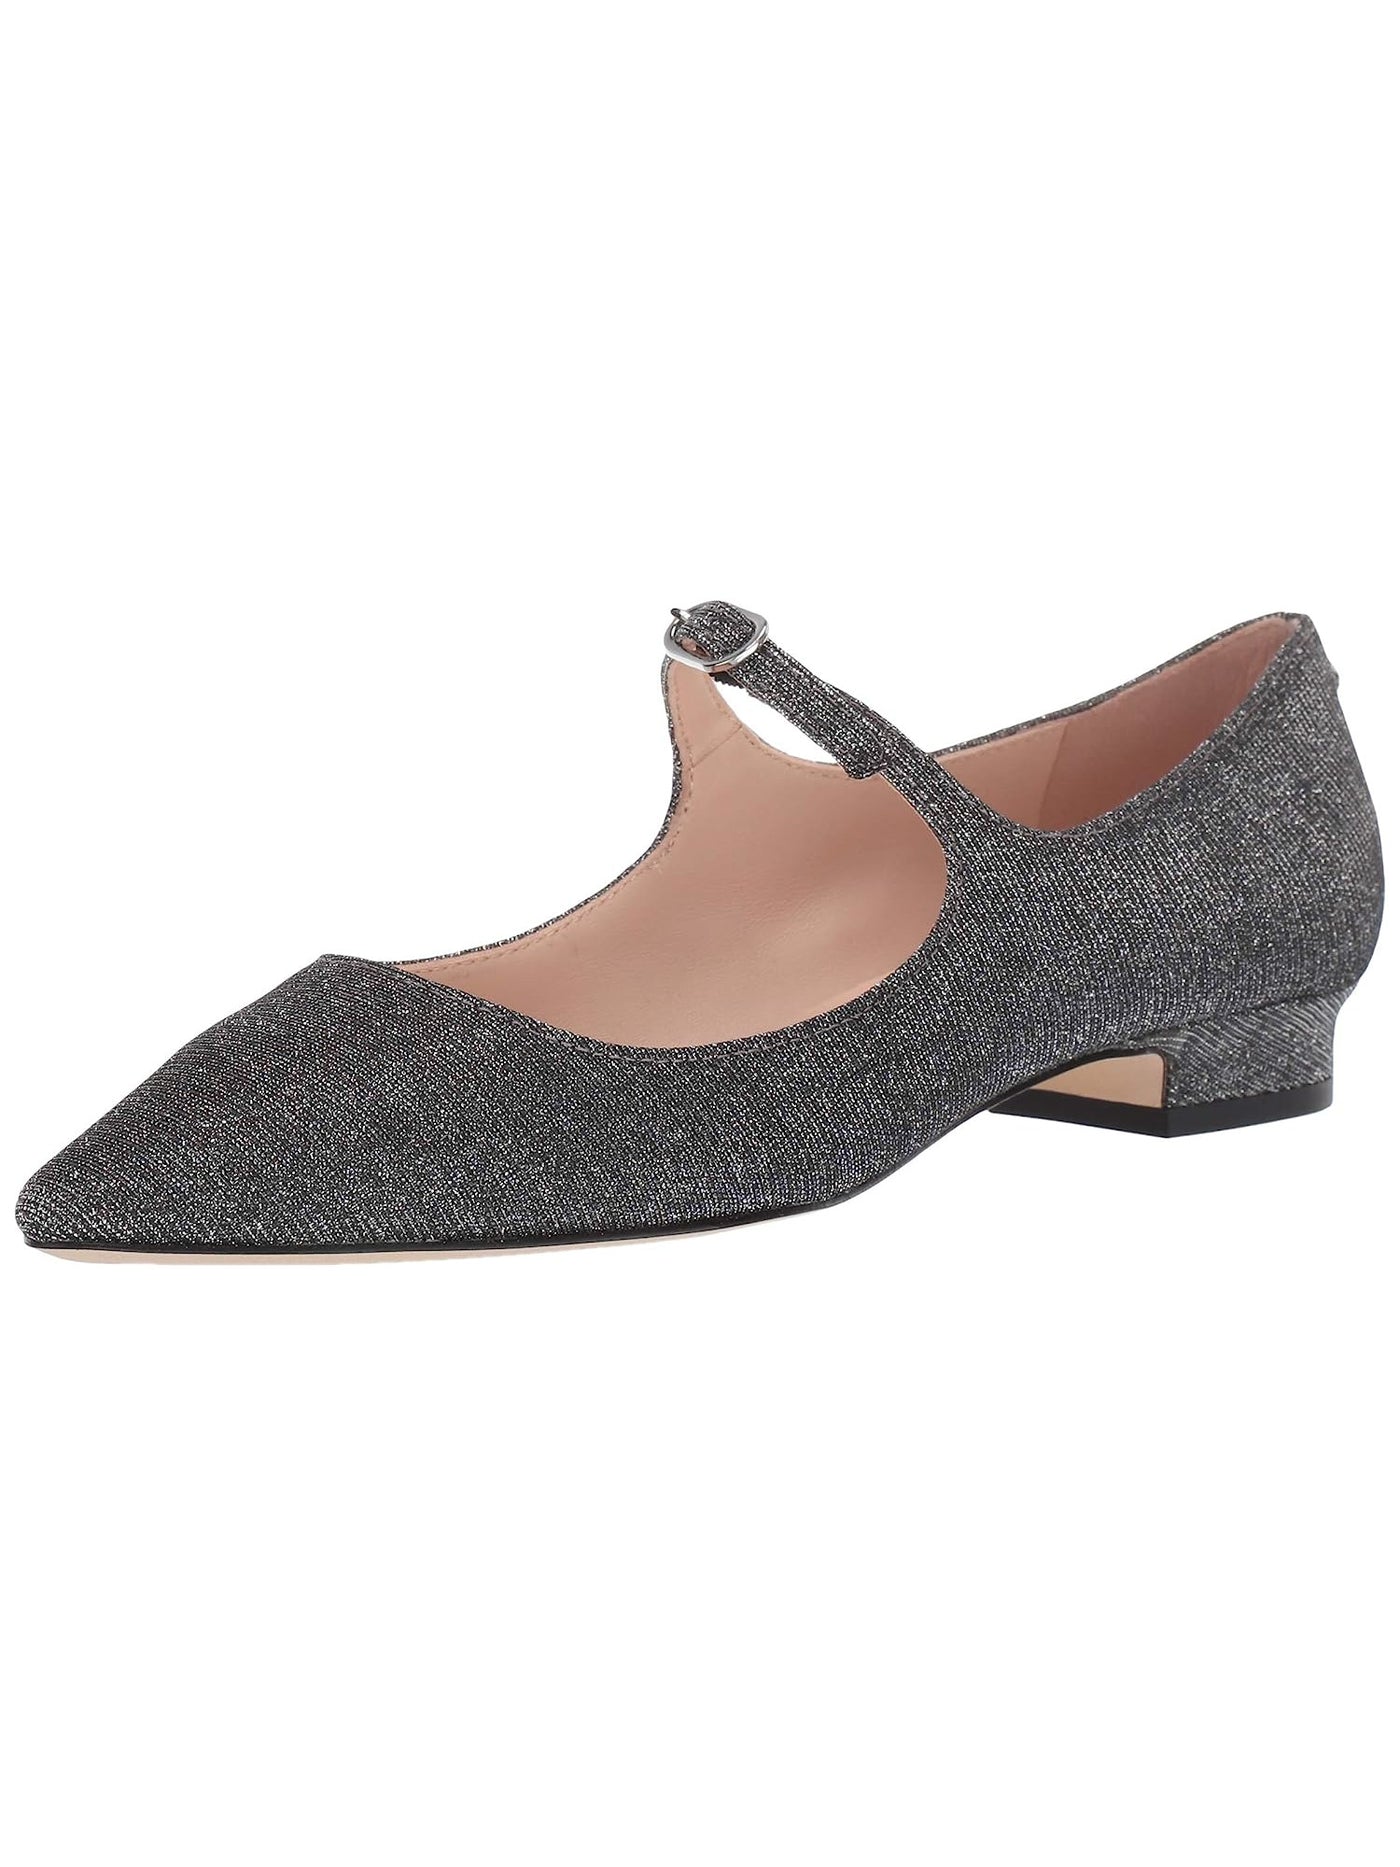 KATE SPADE NEW YORK Womens Smoke Gray Glitter Maryjane Padded Mallory Pointed Toe Buckle Leather Dress Flats Shoes 6.5 M